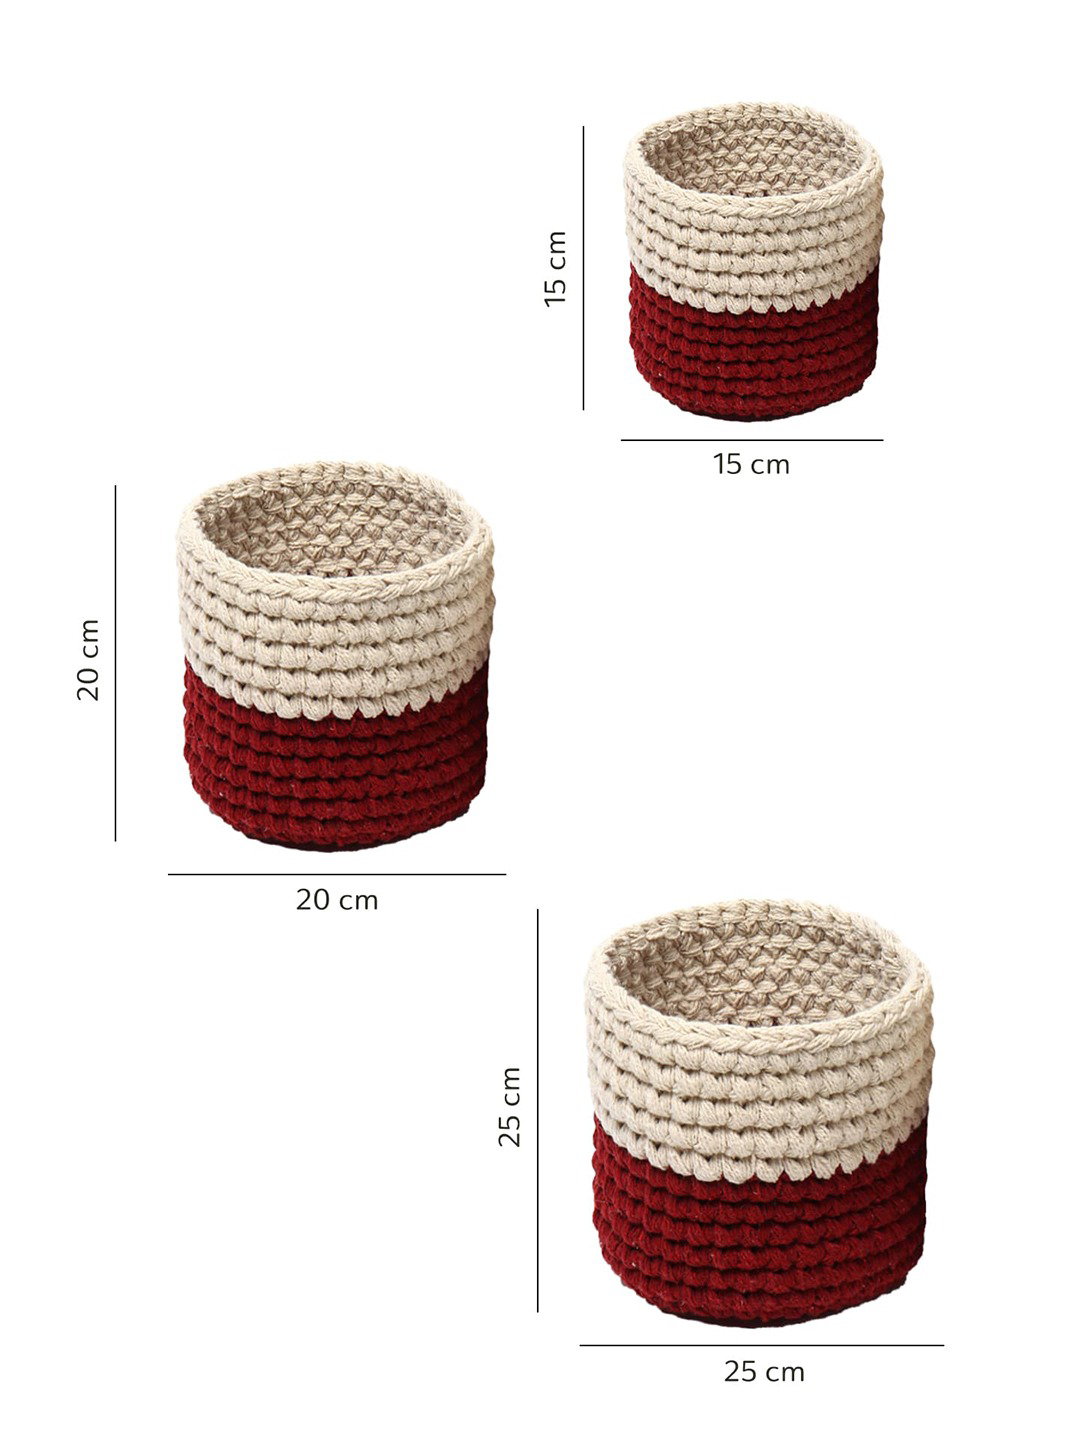 Maroon and Cream Set of 3 Color blocked Jute Crochet Baskets